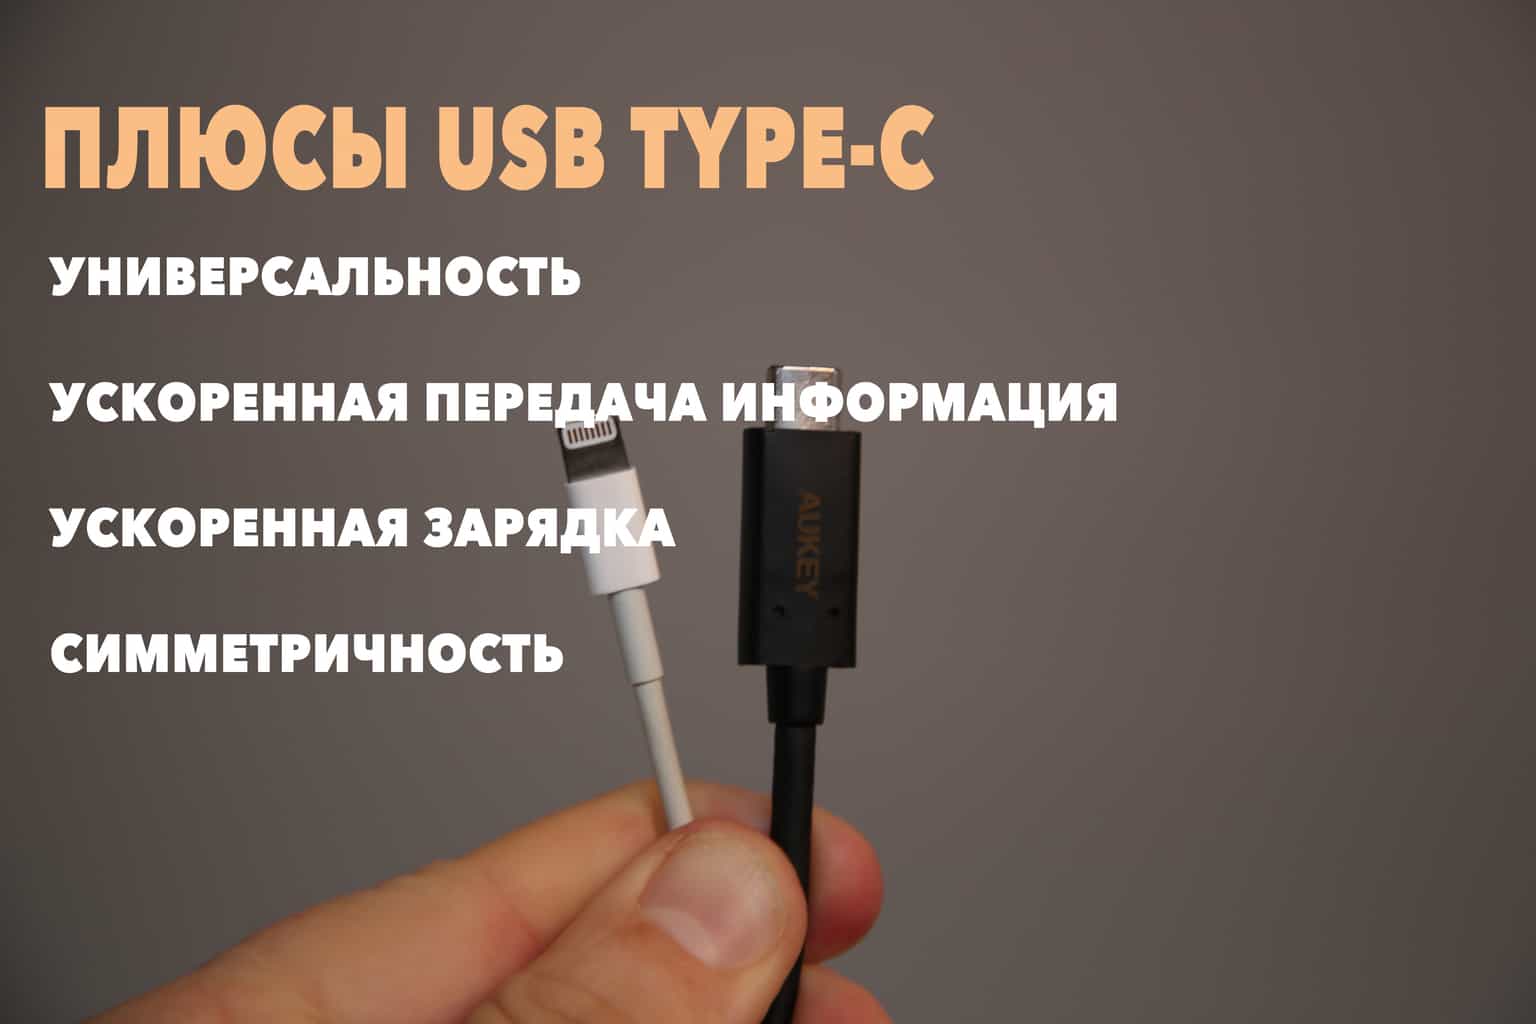 Подключить мощный интернет. Type c плюс и минус. Плюс минус юсб Итайп си. USB Type a плюс минус. Плюс и минус на USB.